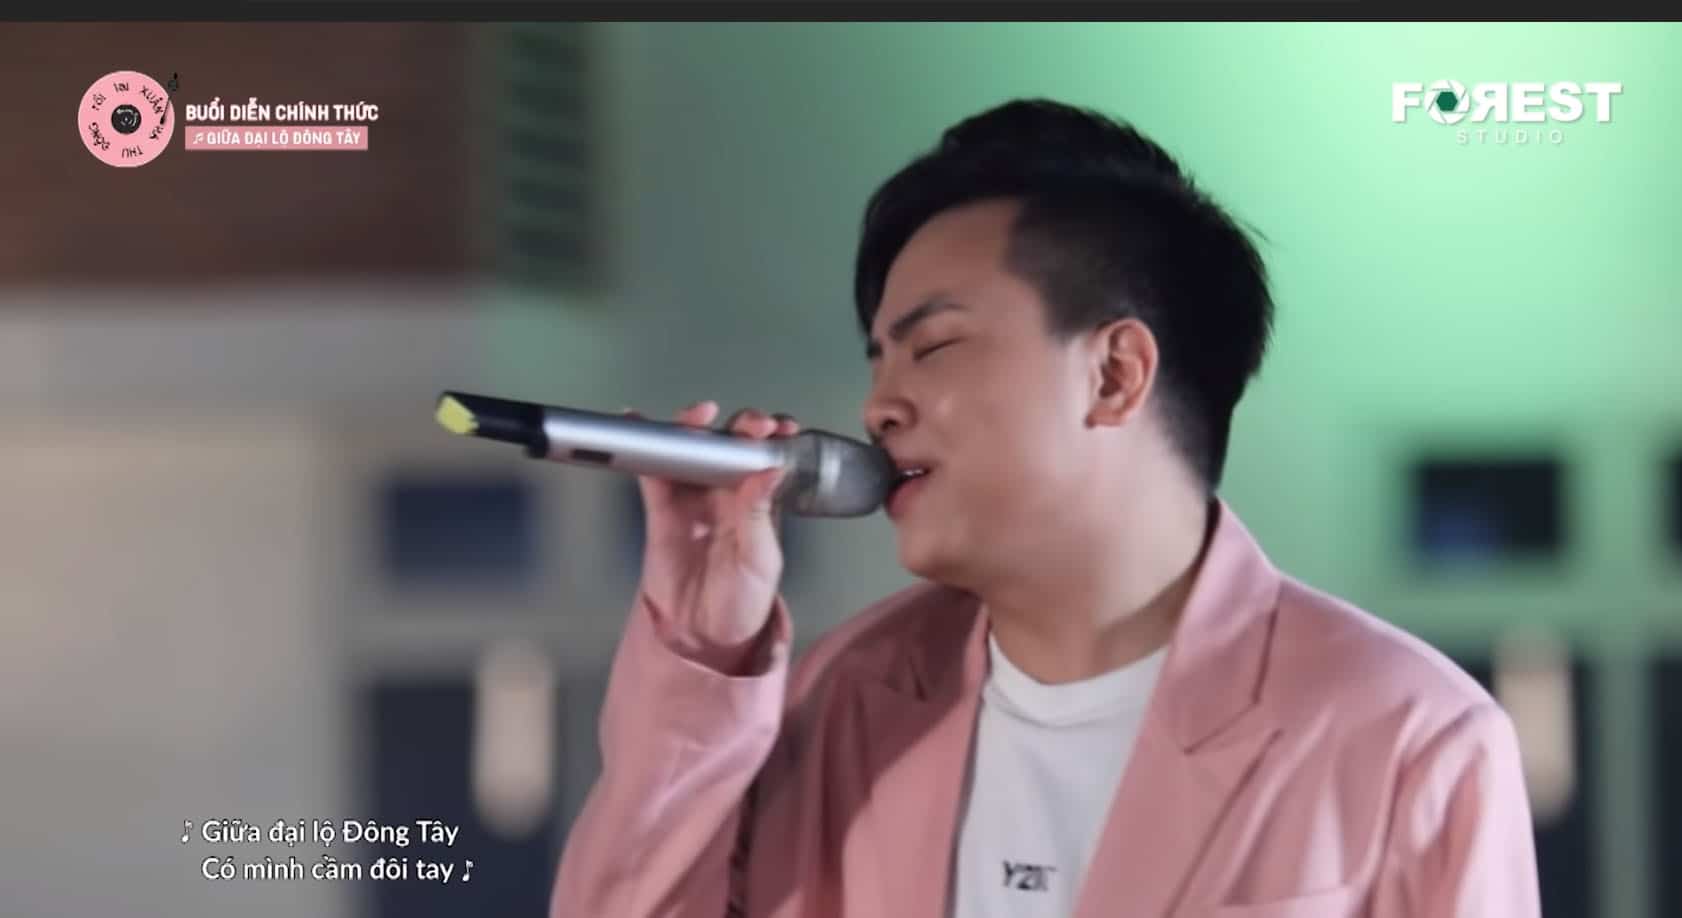 Uyen Linh Performs "Giua Dai Lo Dong Tay" - a Hit Song From Hua Kim ...